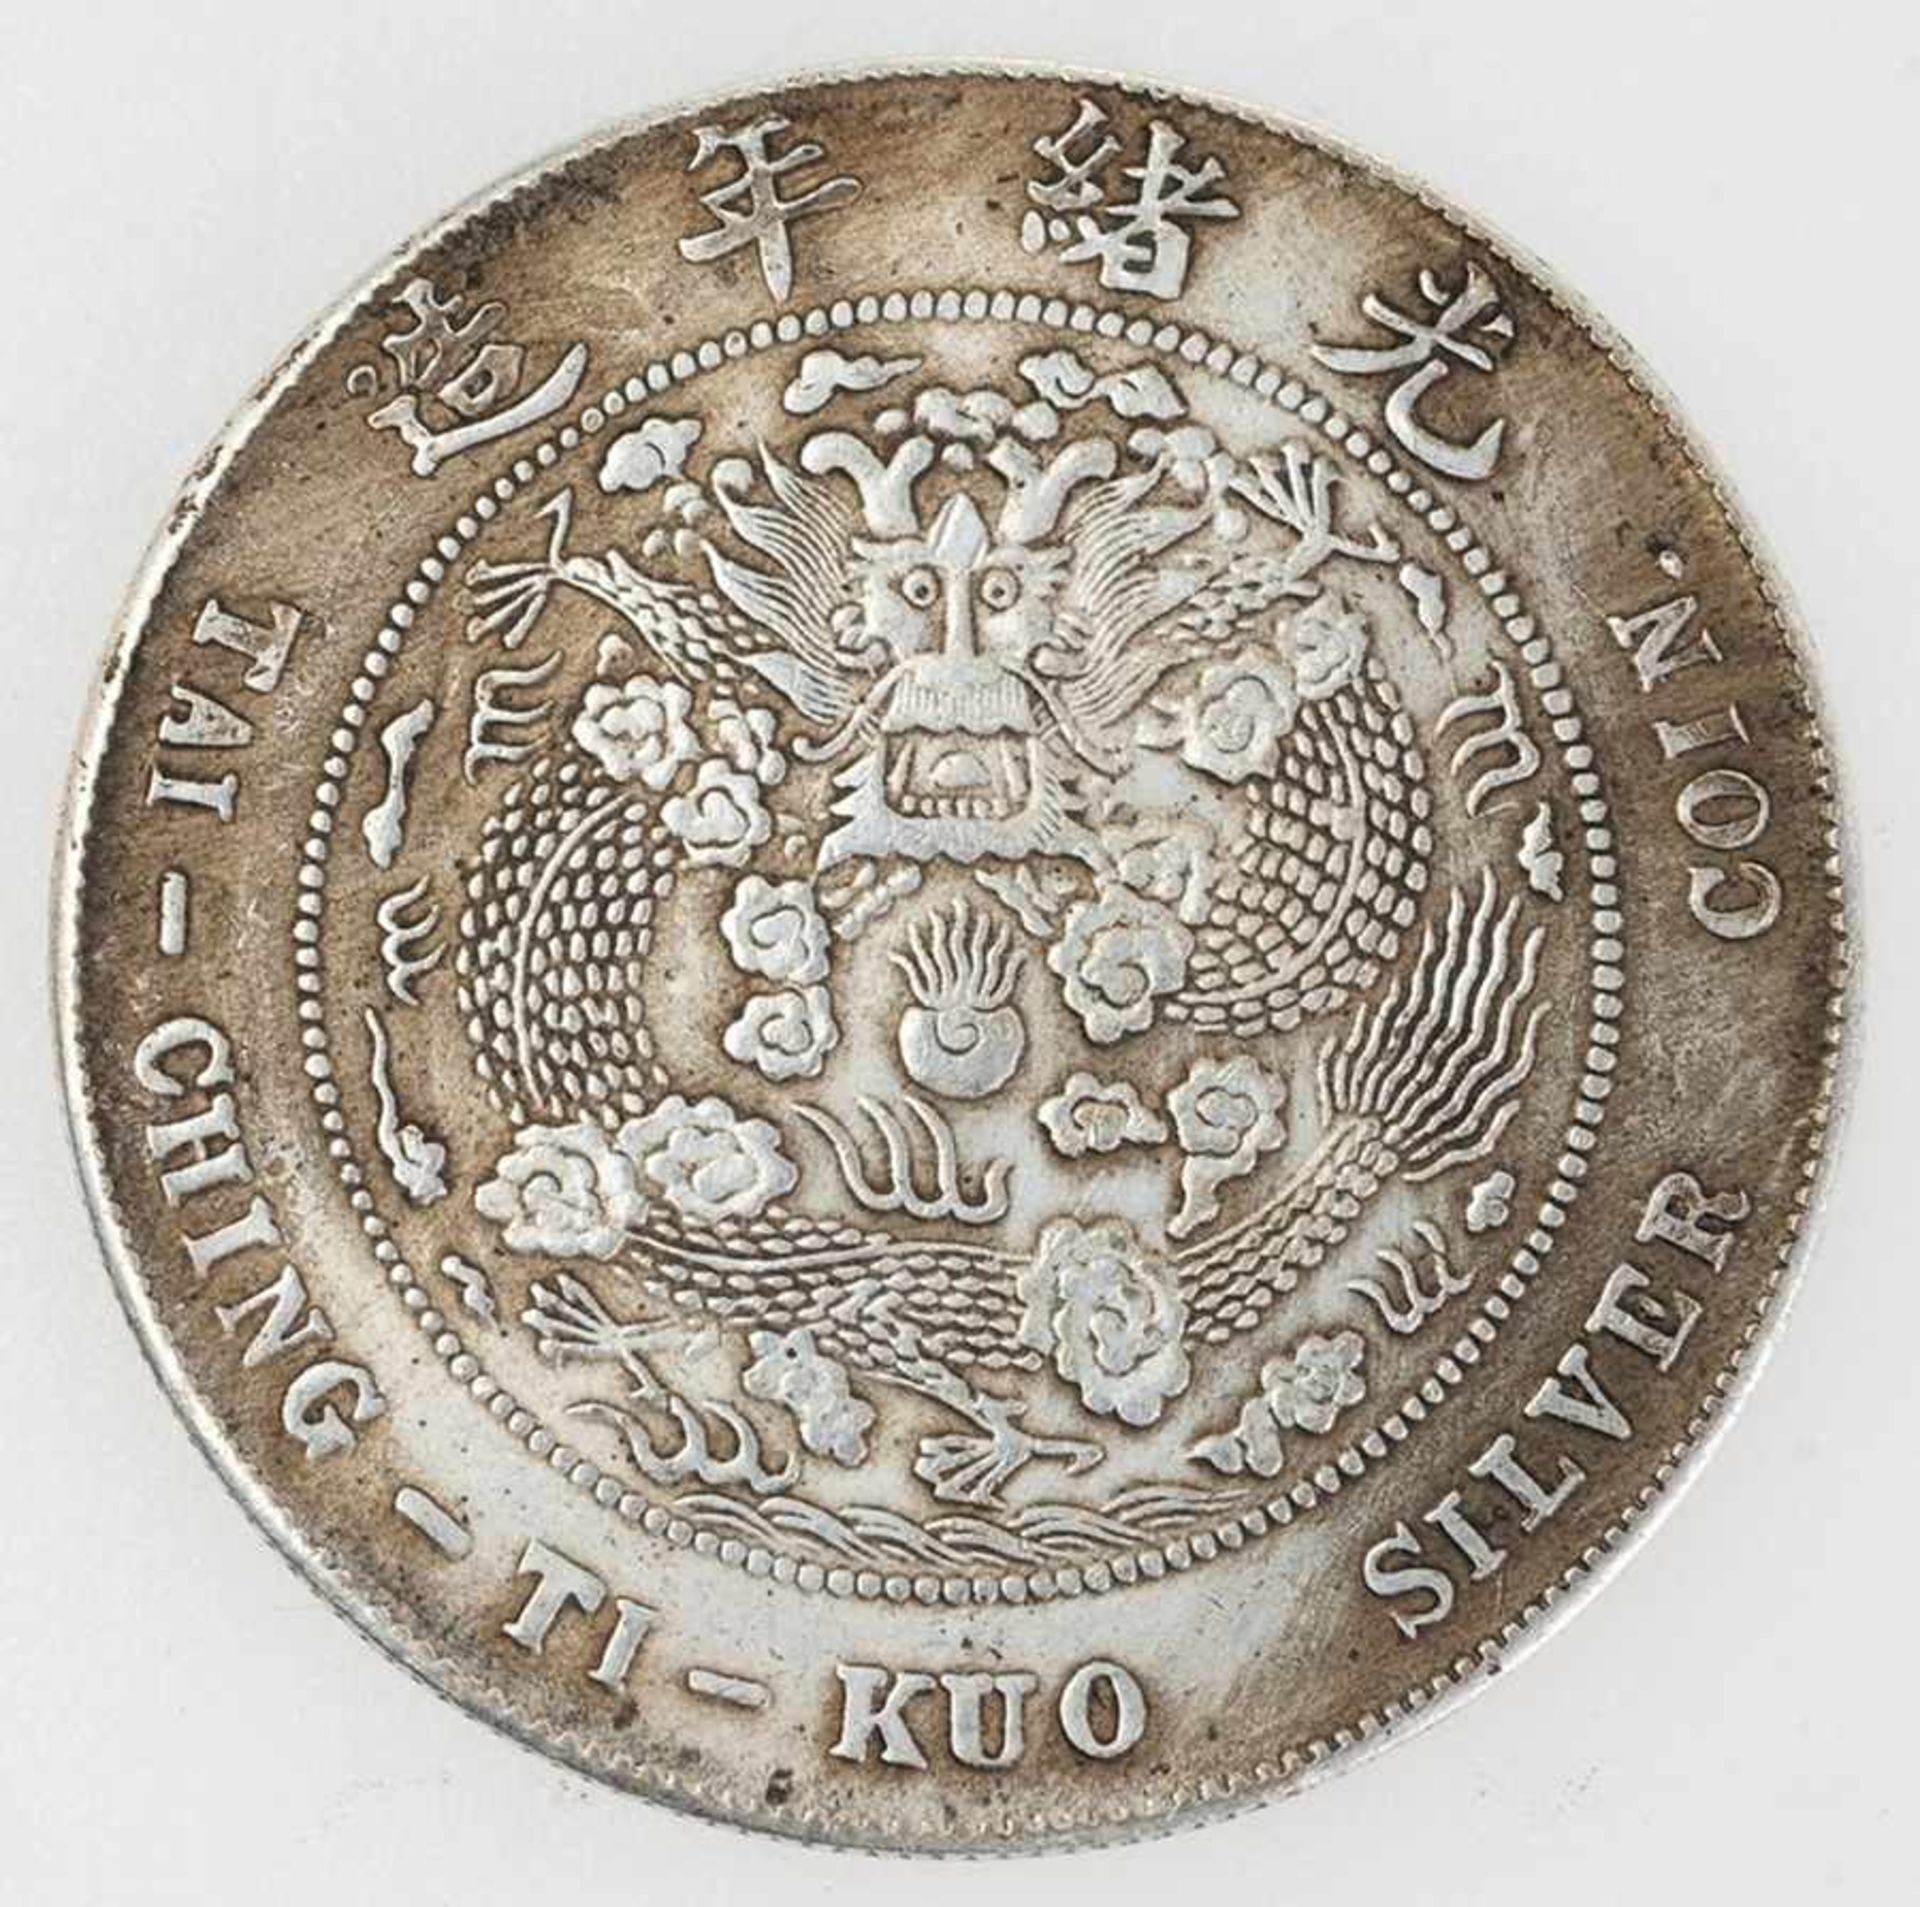 Chinesische Silbermünze Wohl Silber-Tael, u. a. bez. "Tai-Ching-Ti-Kuo Silver Coin". Alters- u.